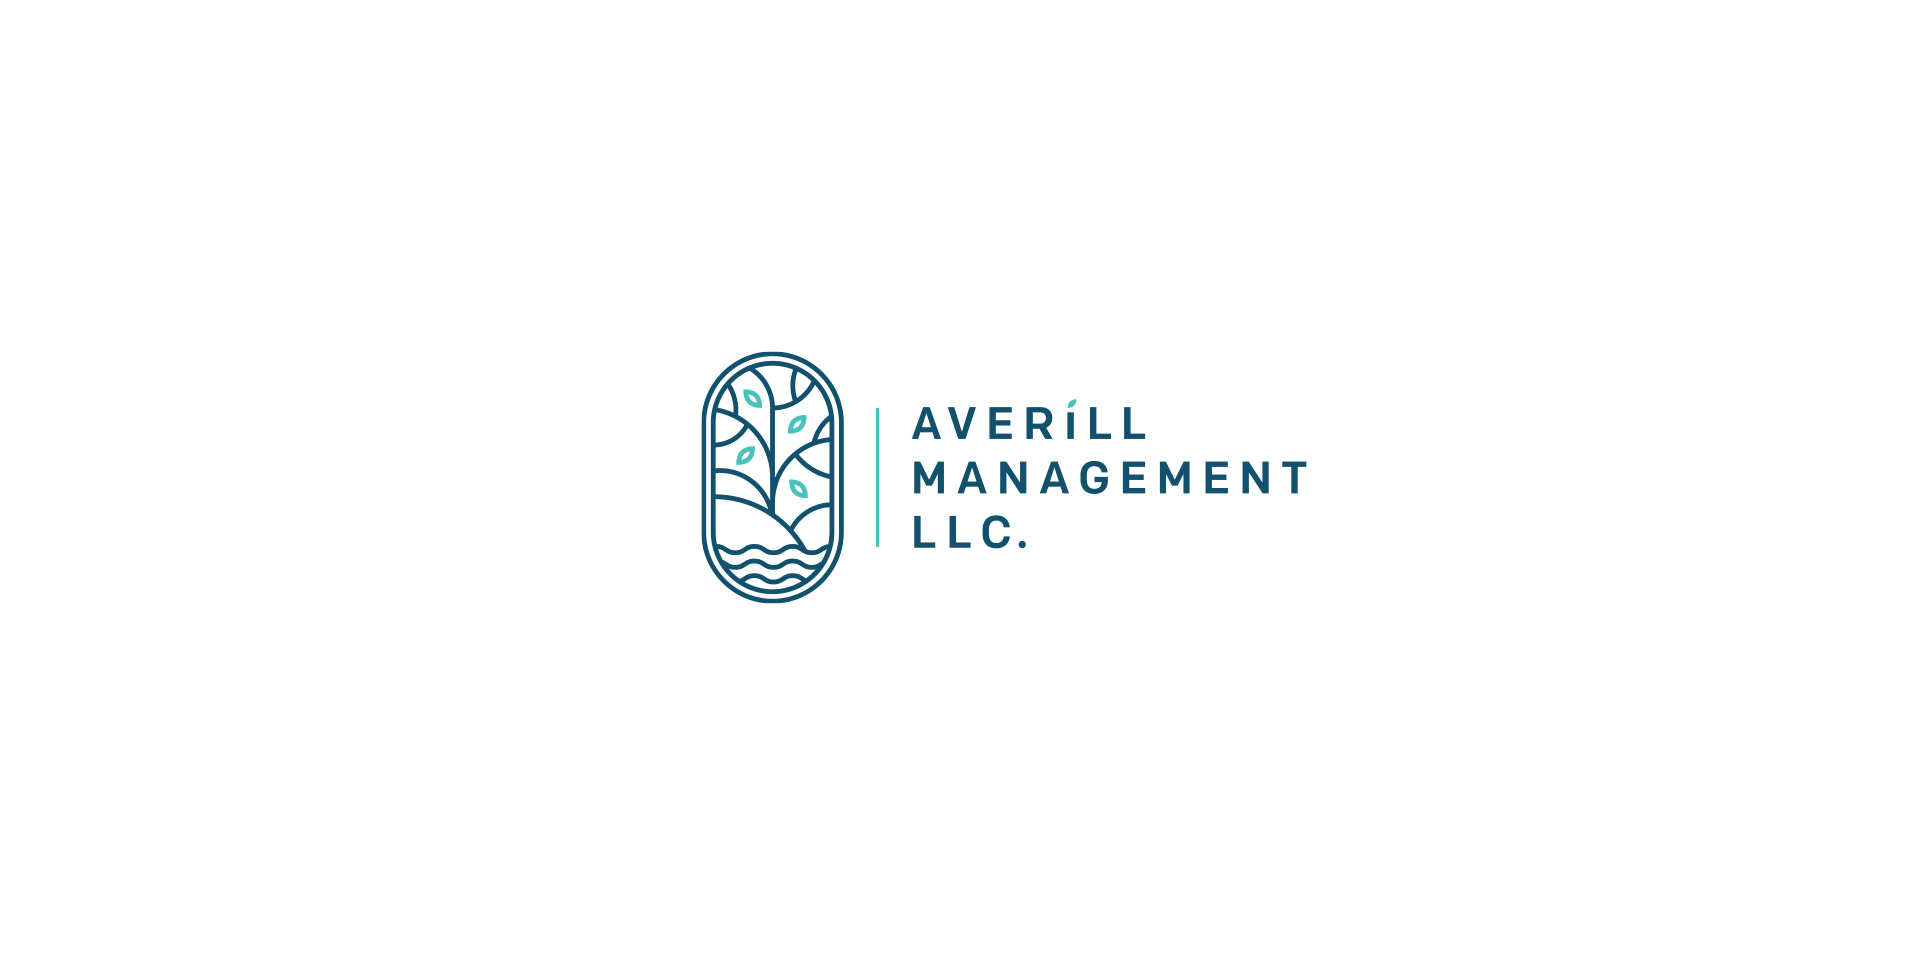 Averill management LLC.